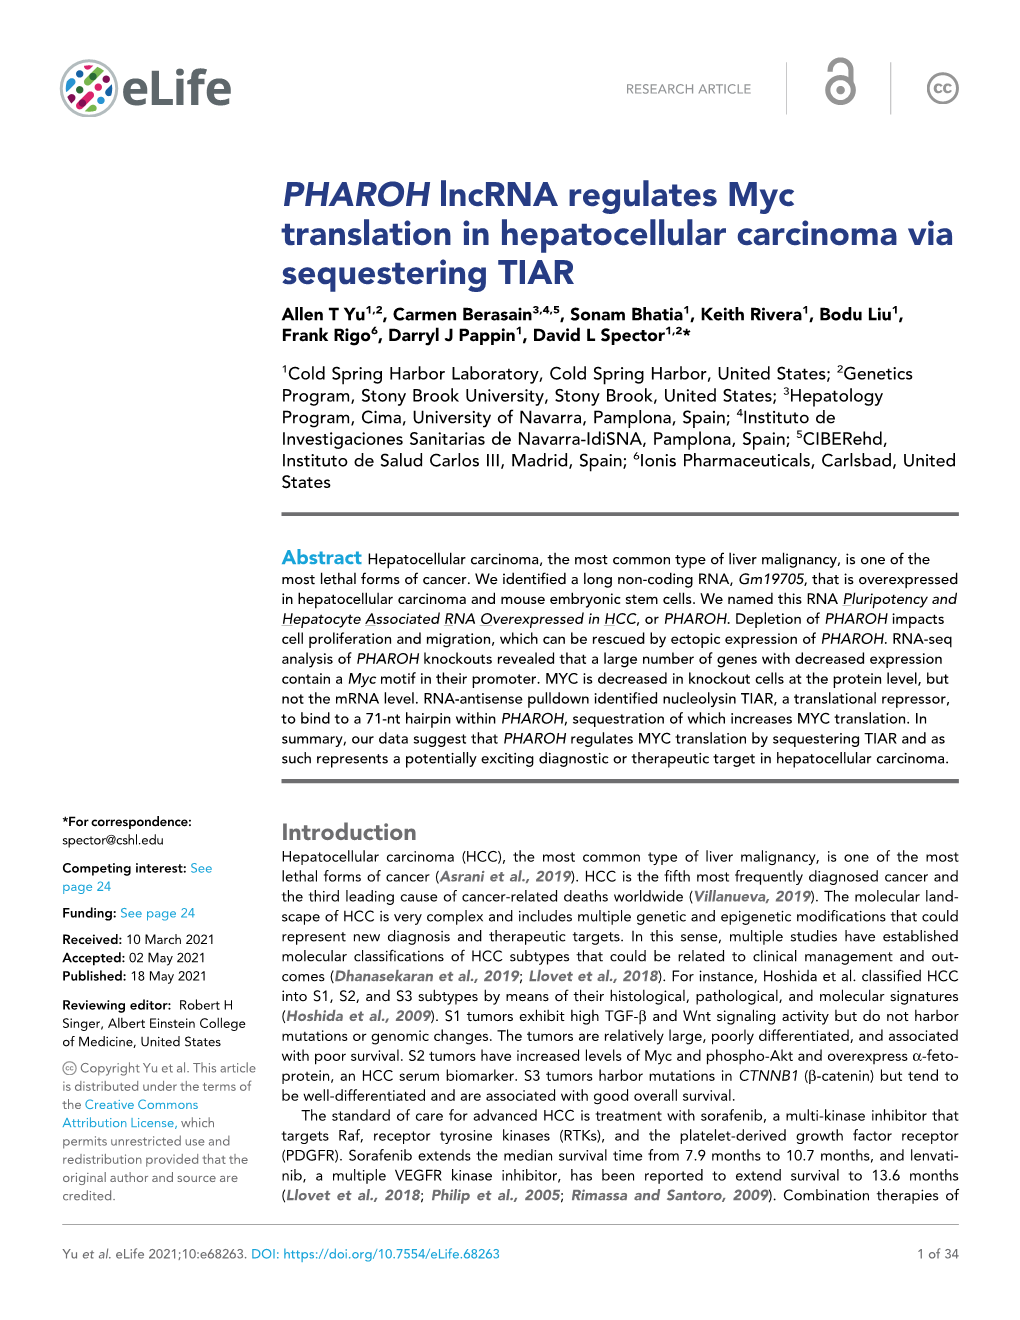 PHAROH Lncrna Regulates Myc Translation in Hepatocellular